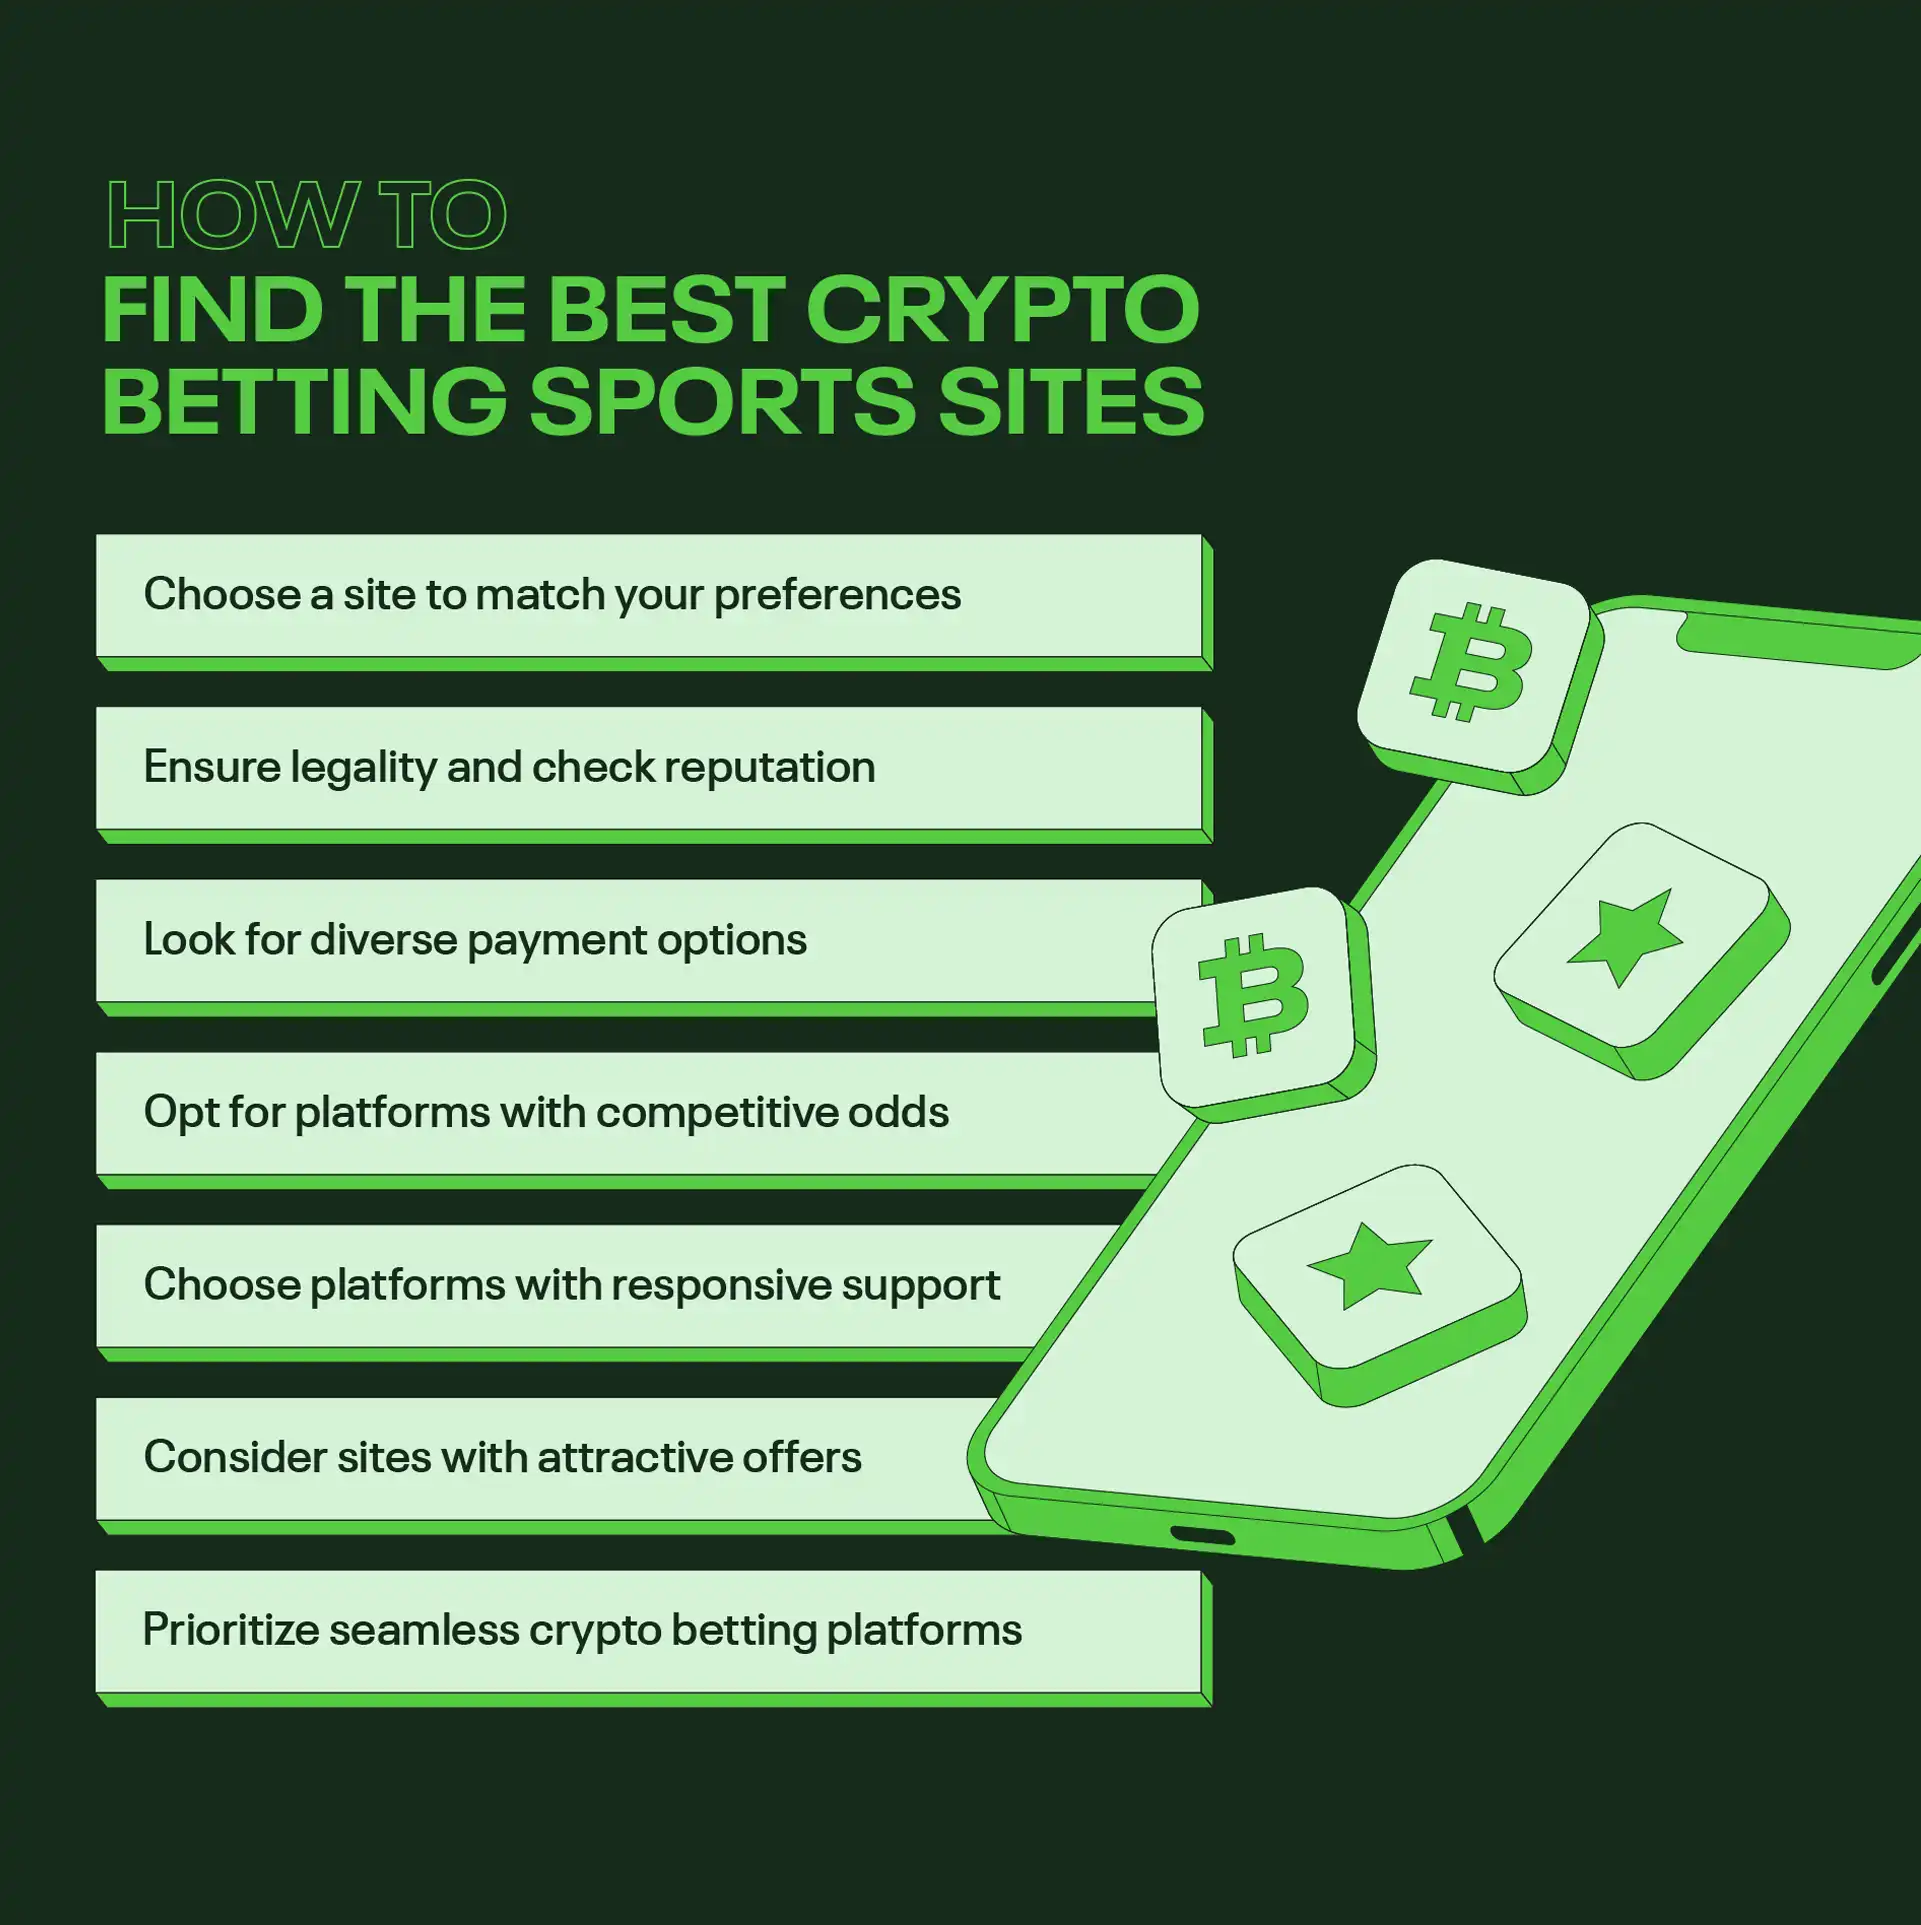 Choosing crypto sports betting